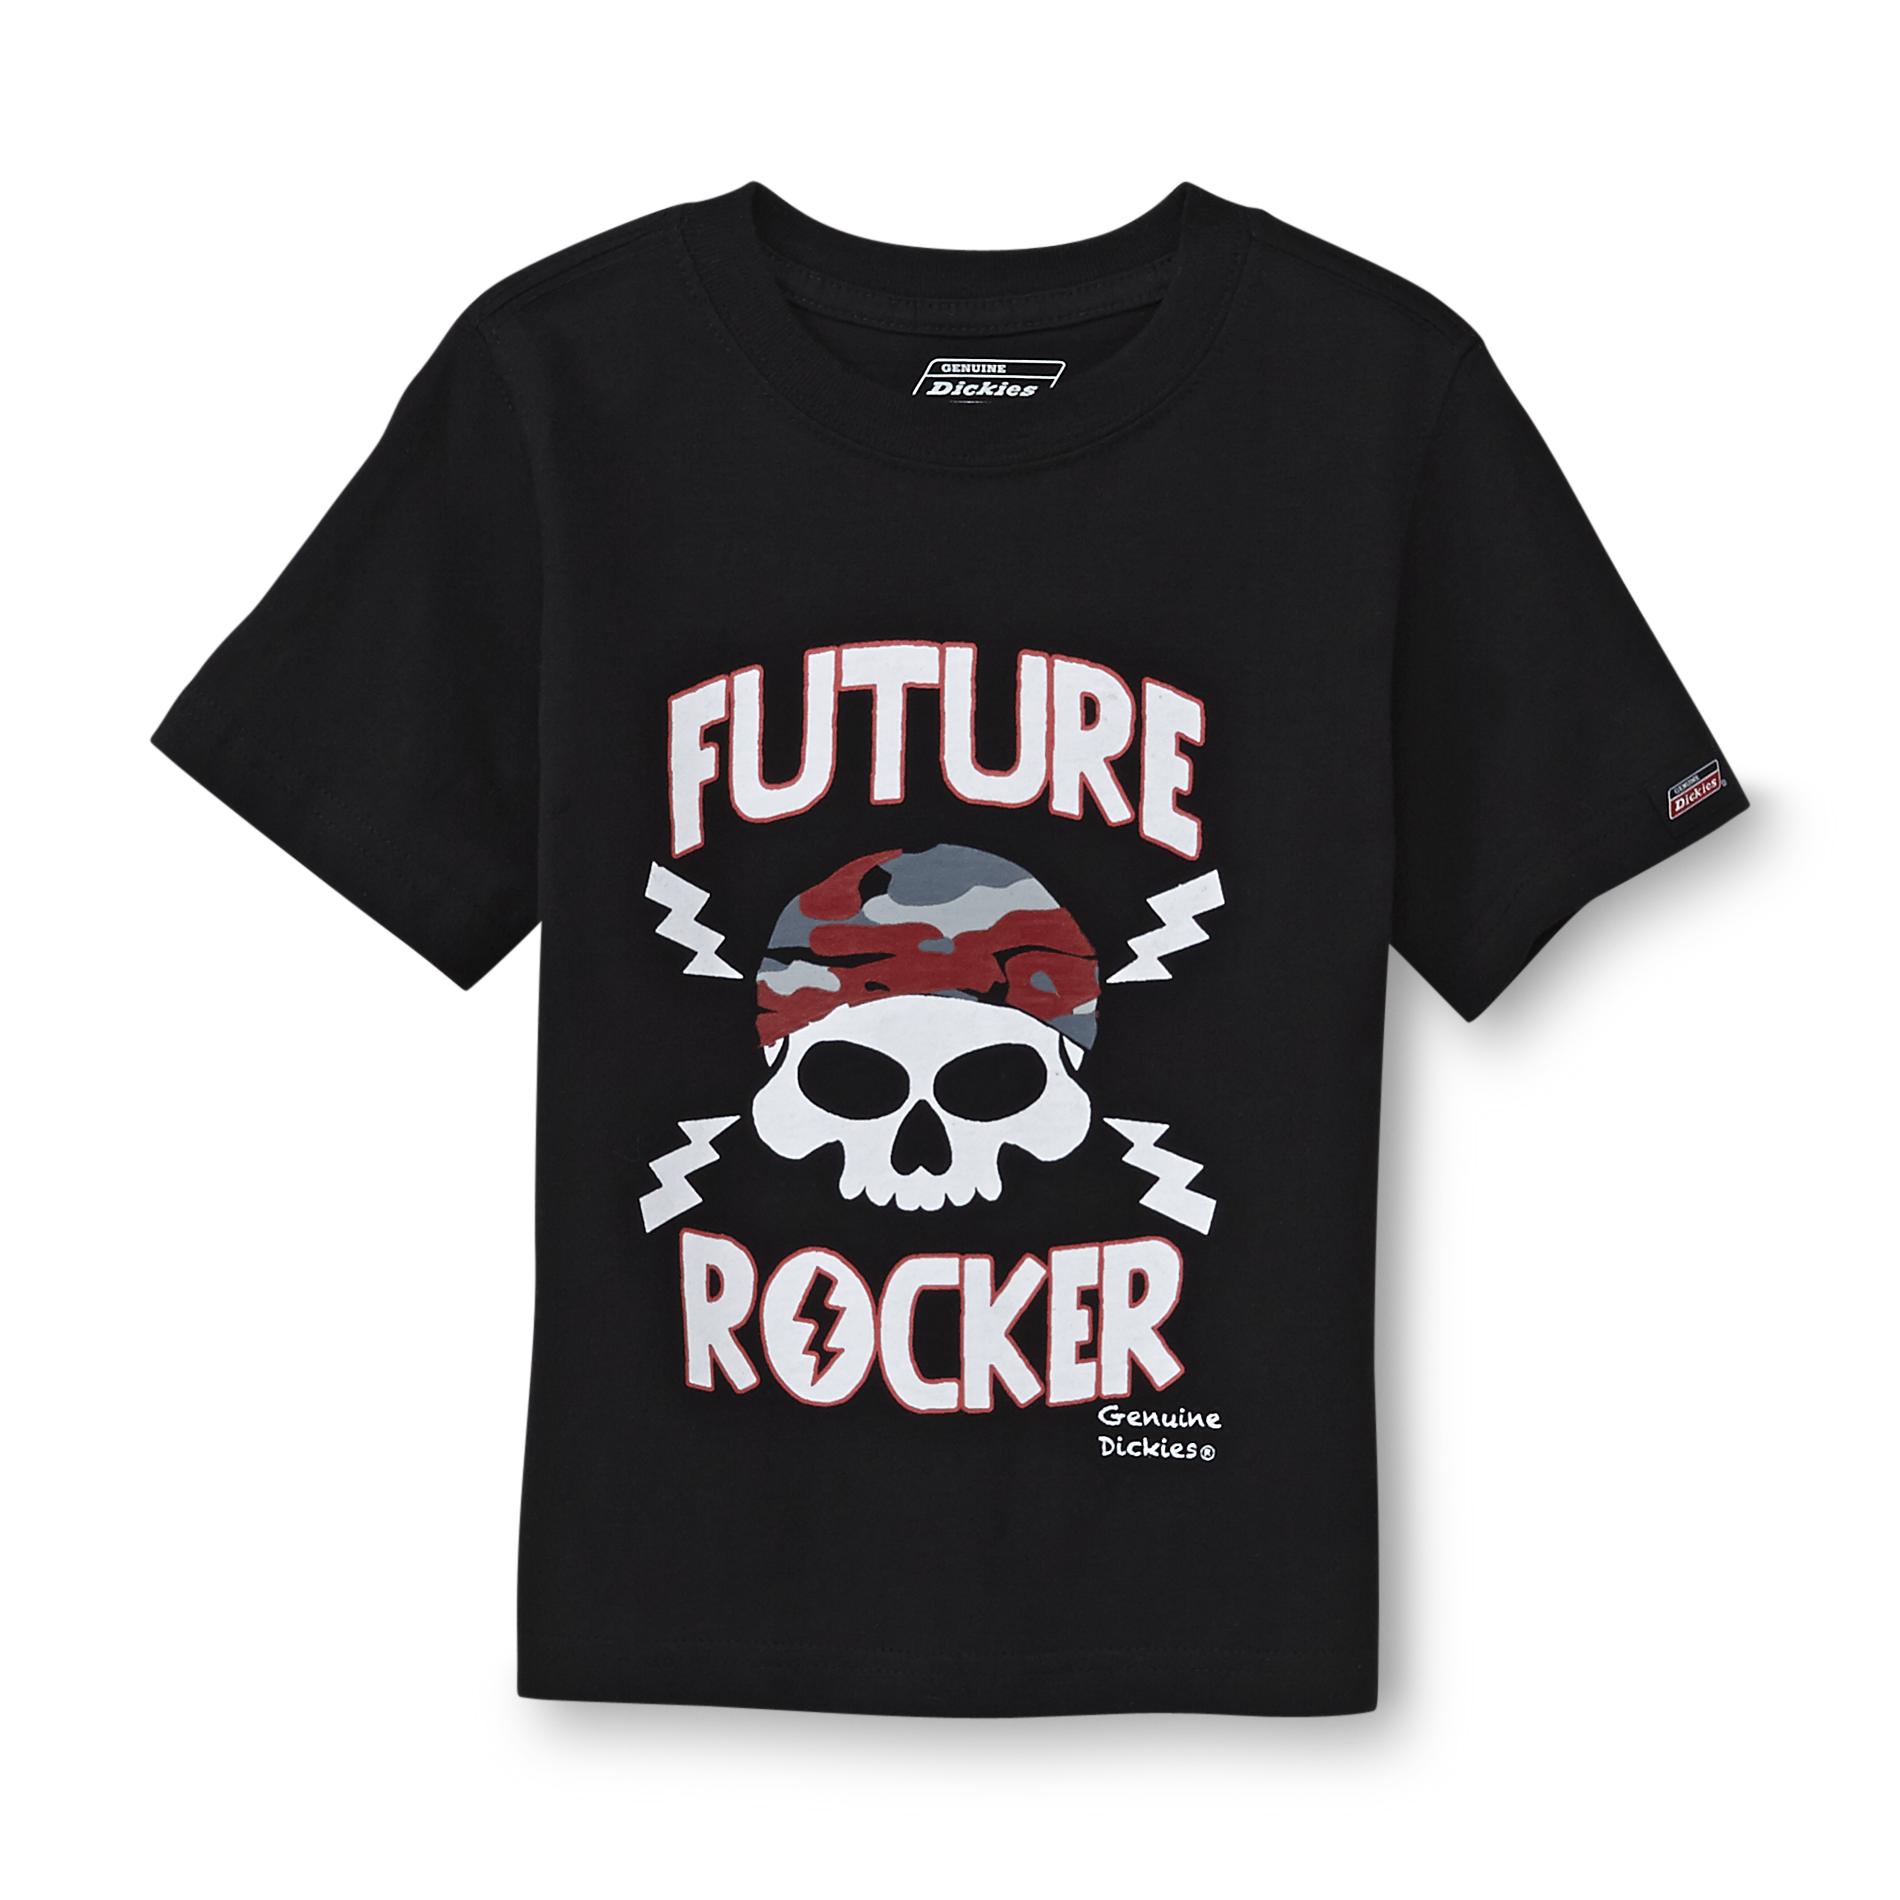 Dickies Infant & Toddler Boy's Graphic T-Shirt - Future Rocker